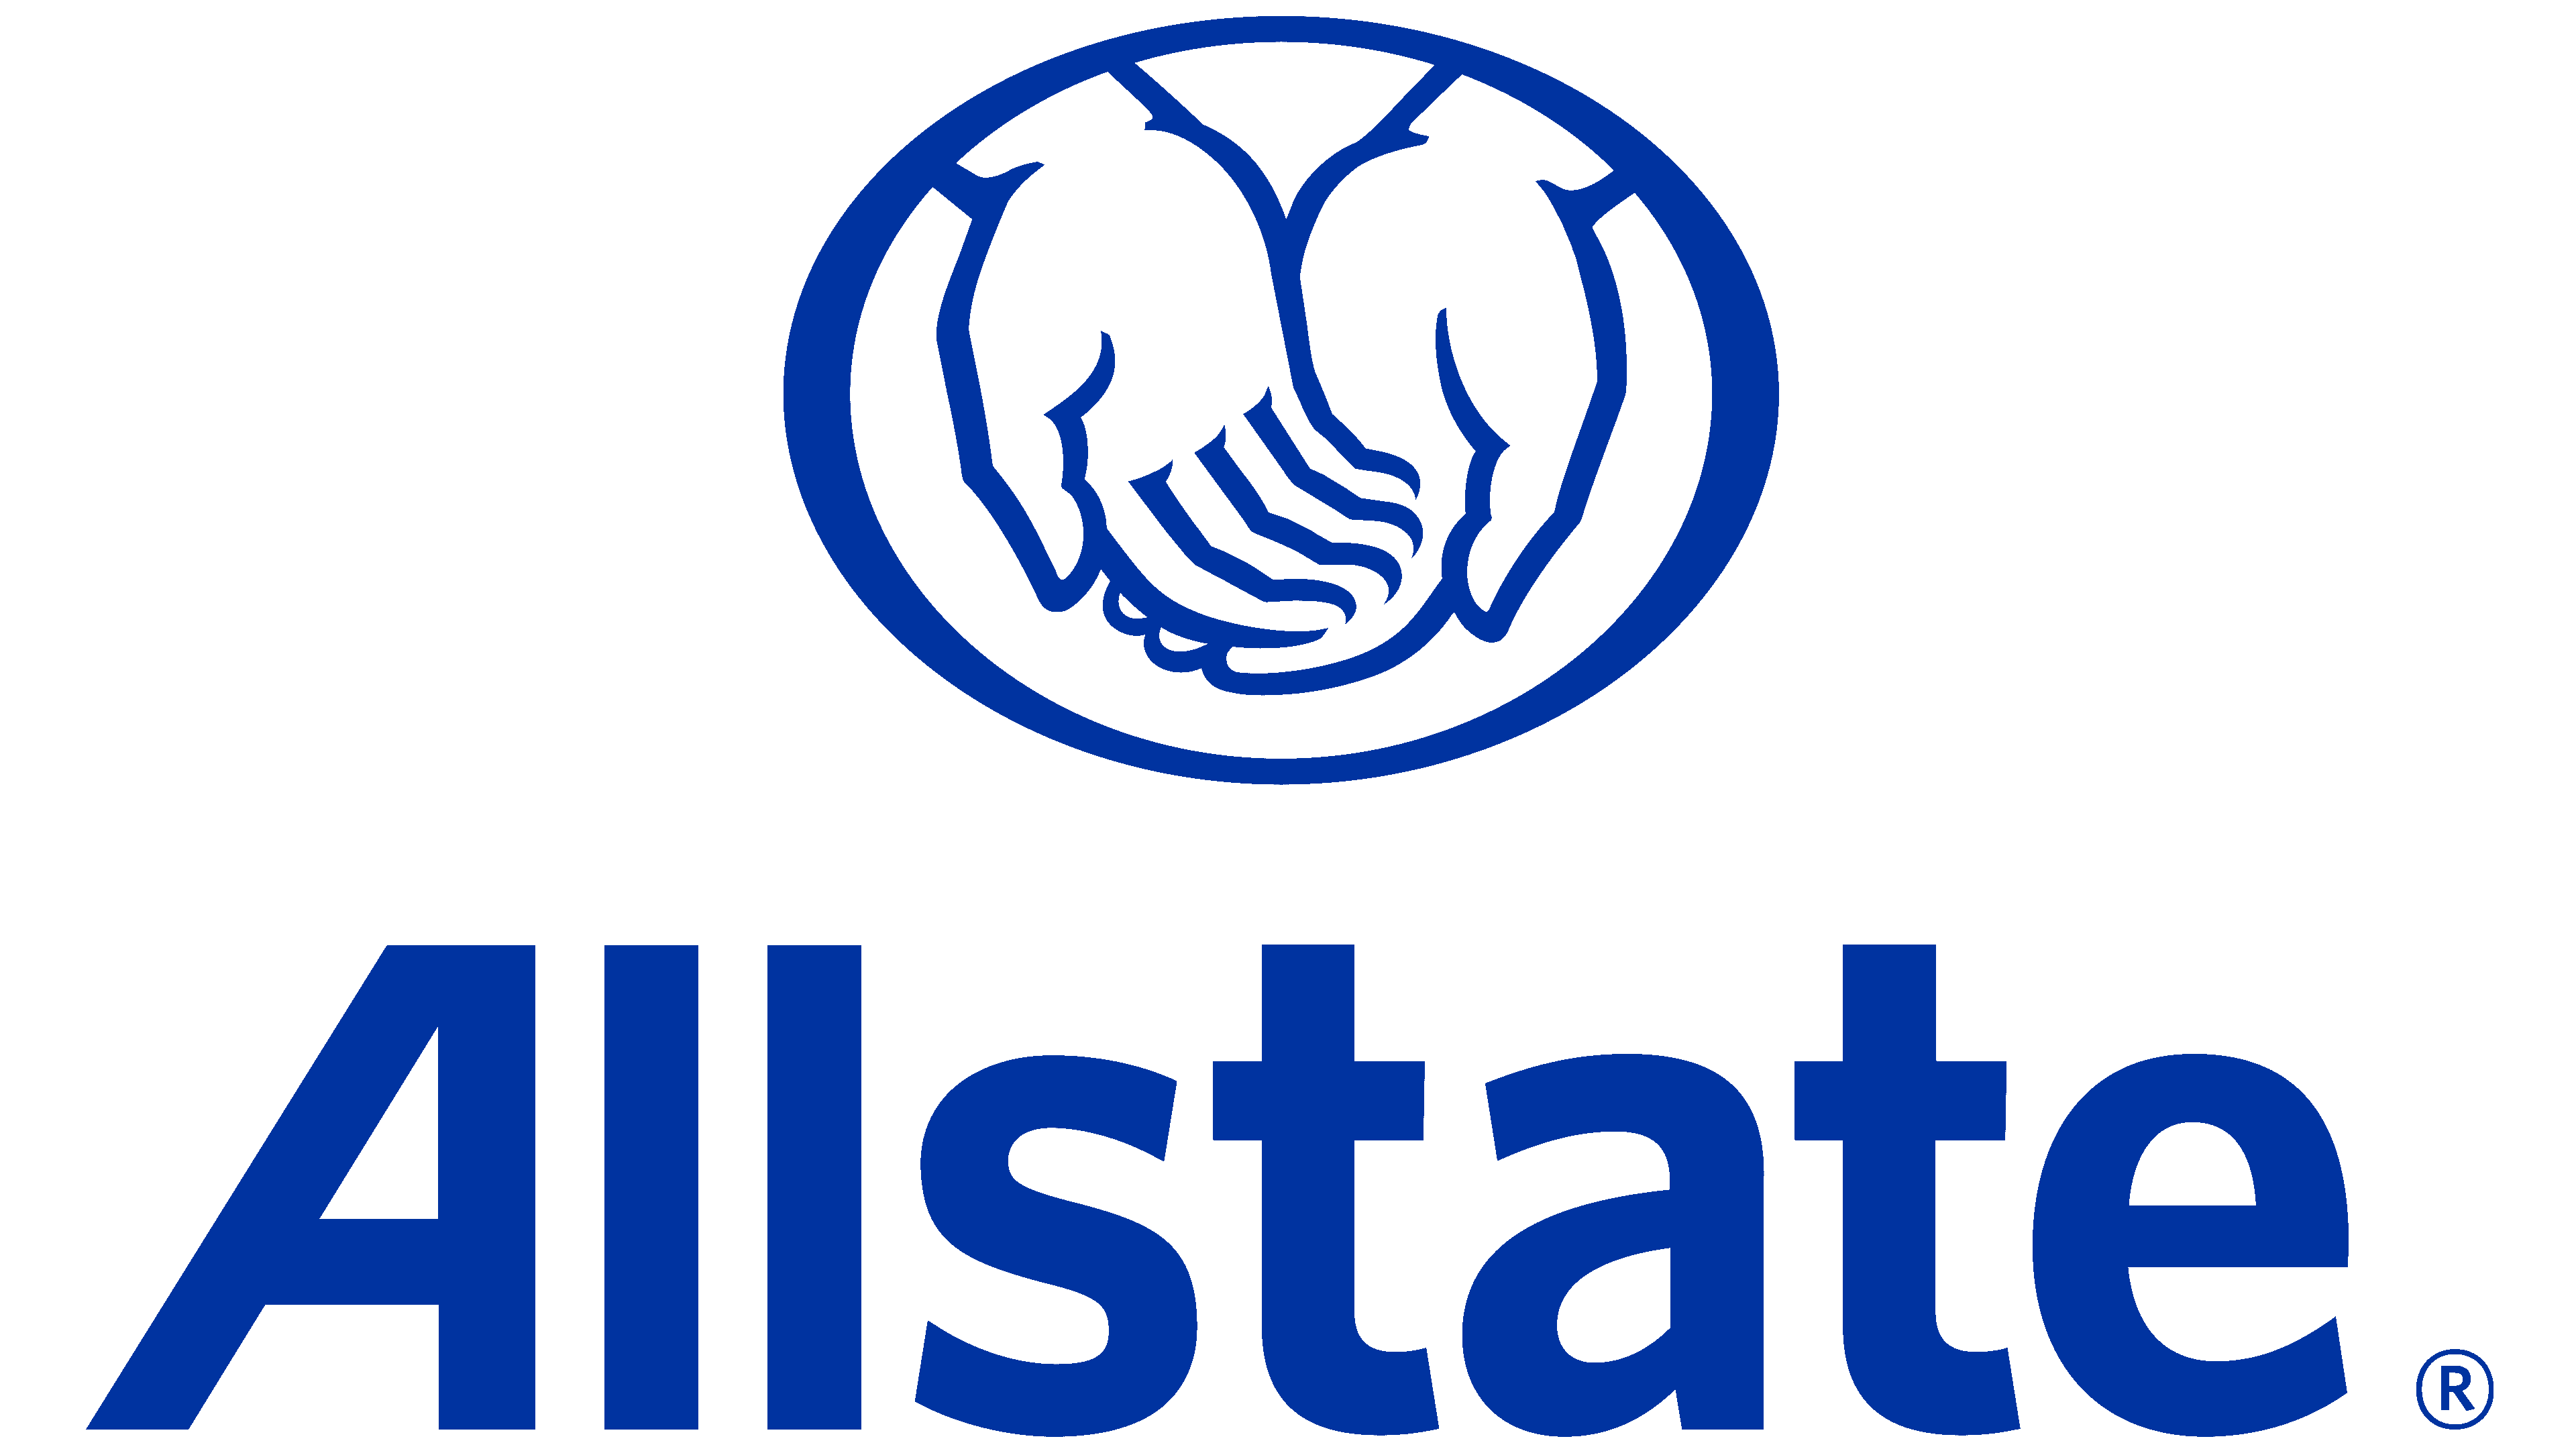 Allstate Corporate Services